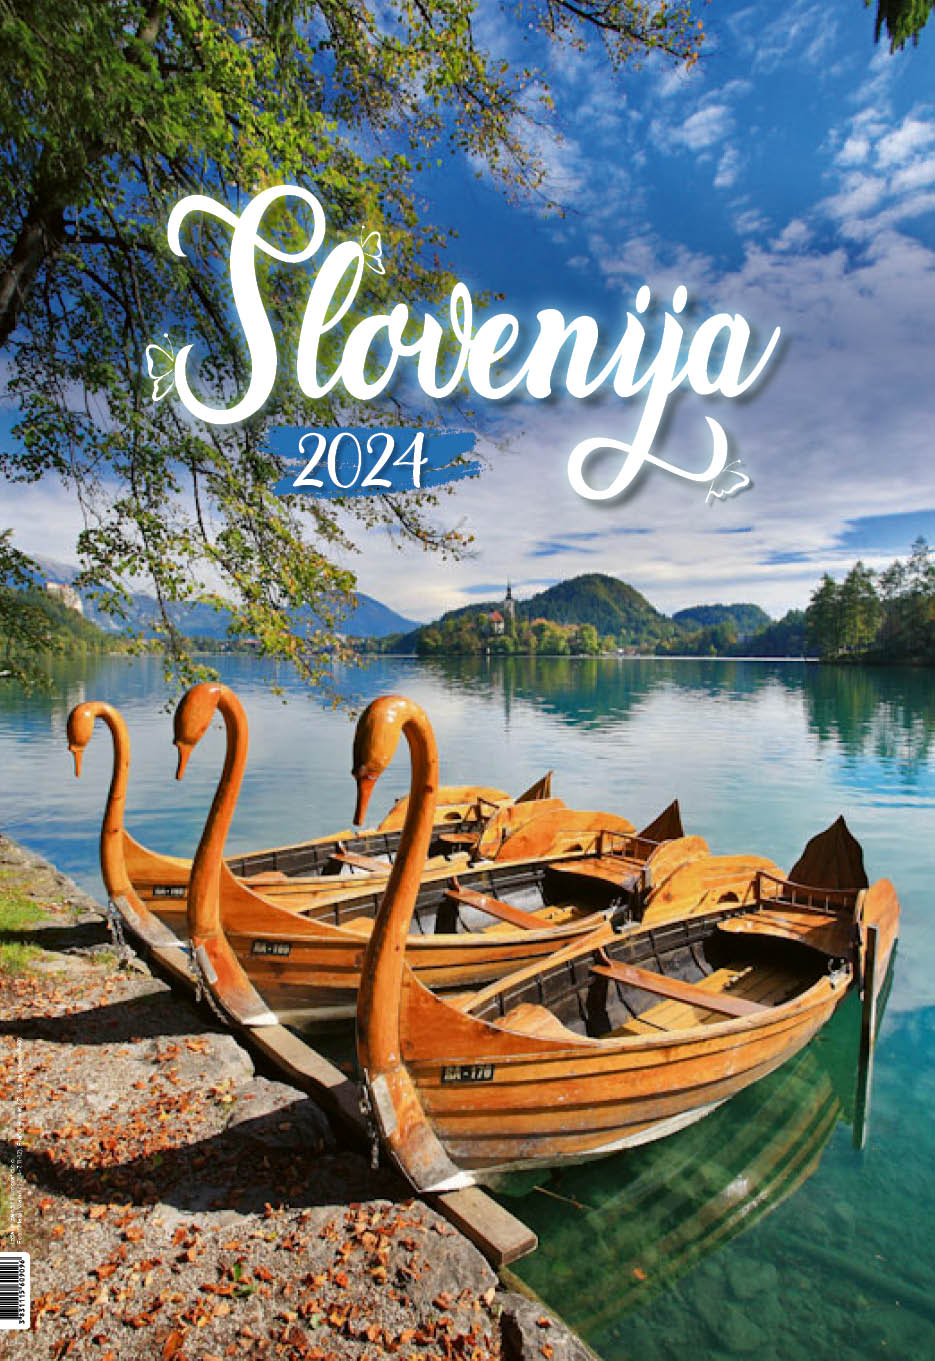 Koledar Slovenija 2024